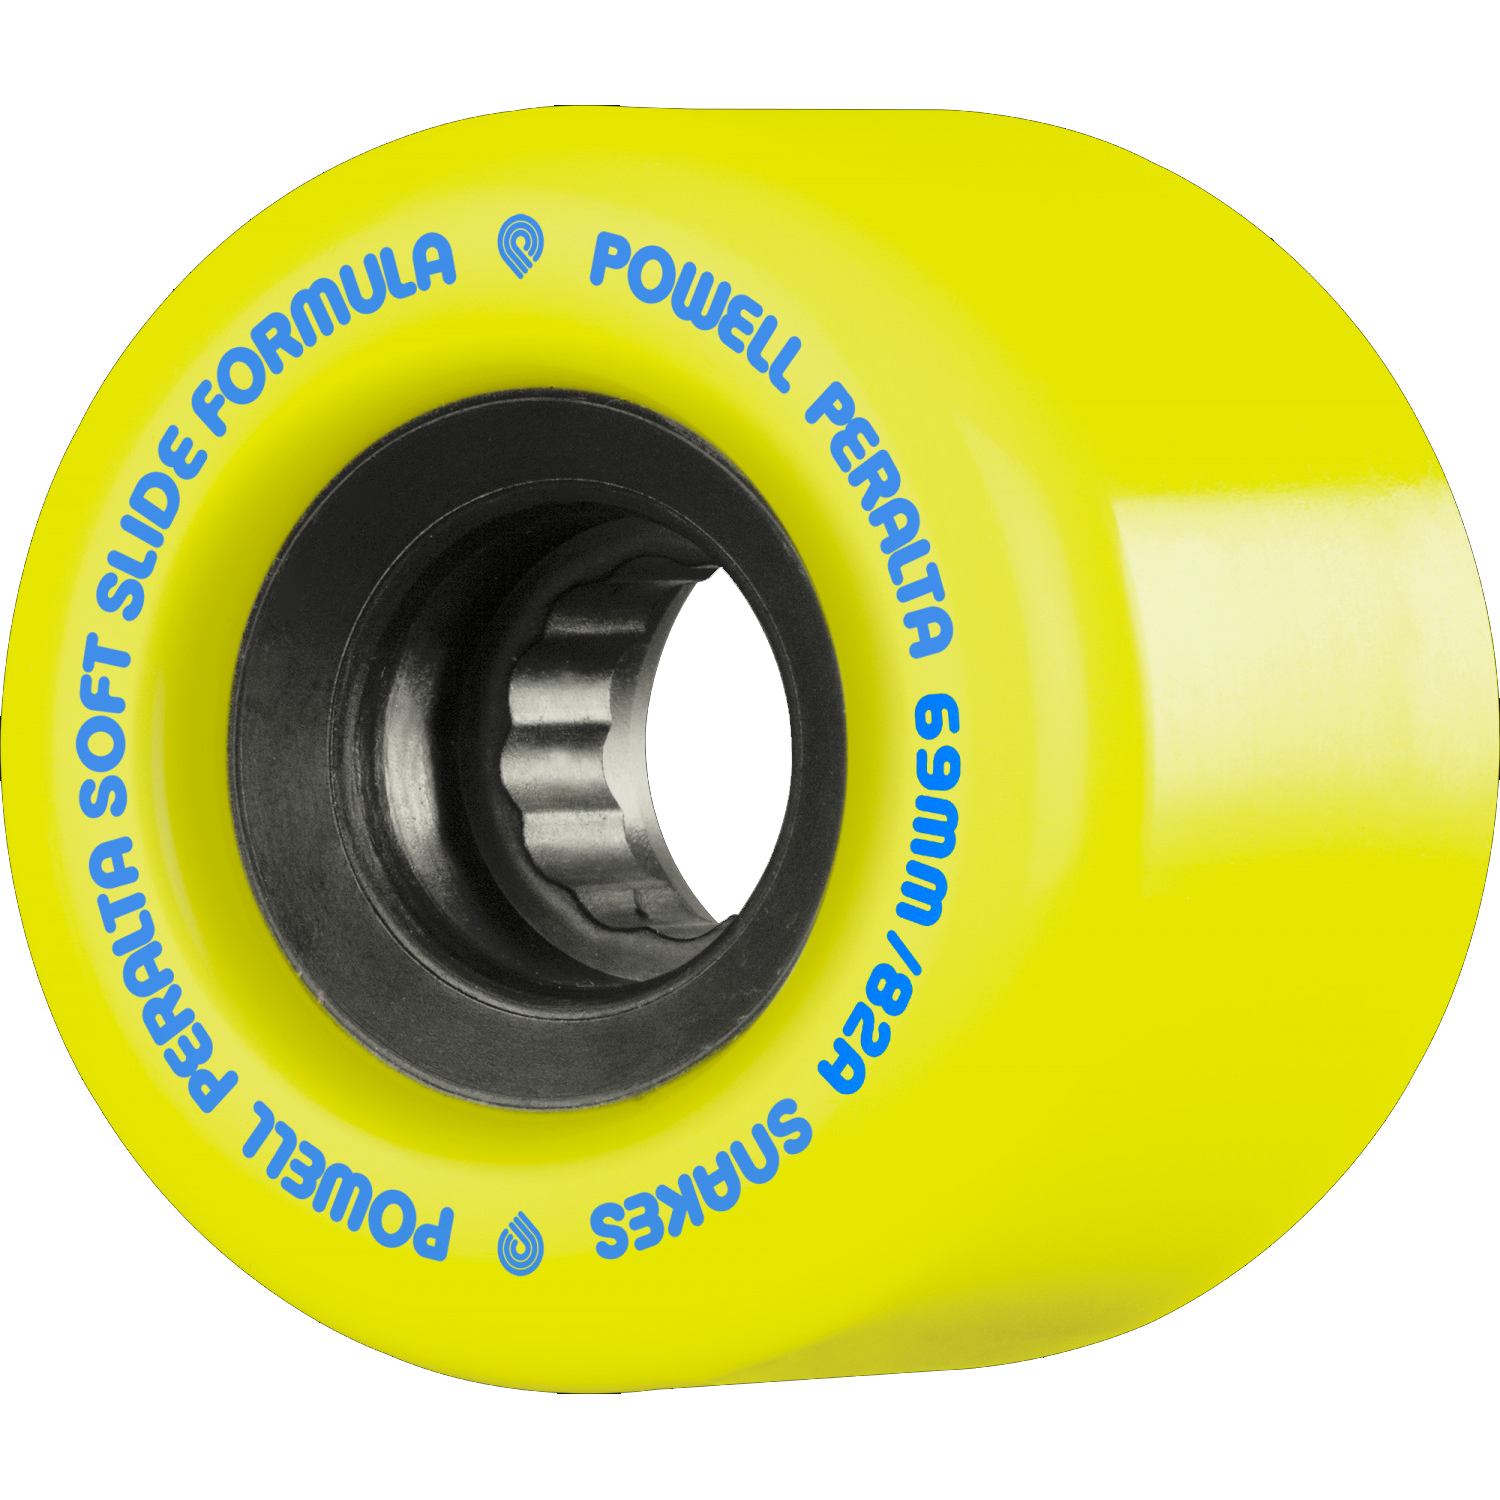 Powell Peralta Snakes Skateboard Wheels 66mm 75a 4pk Yellow